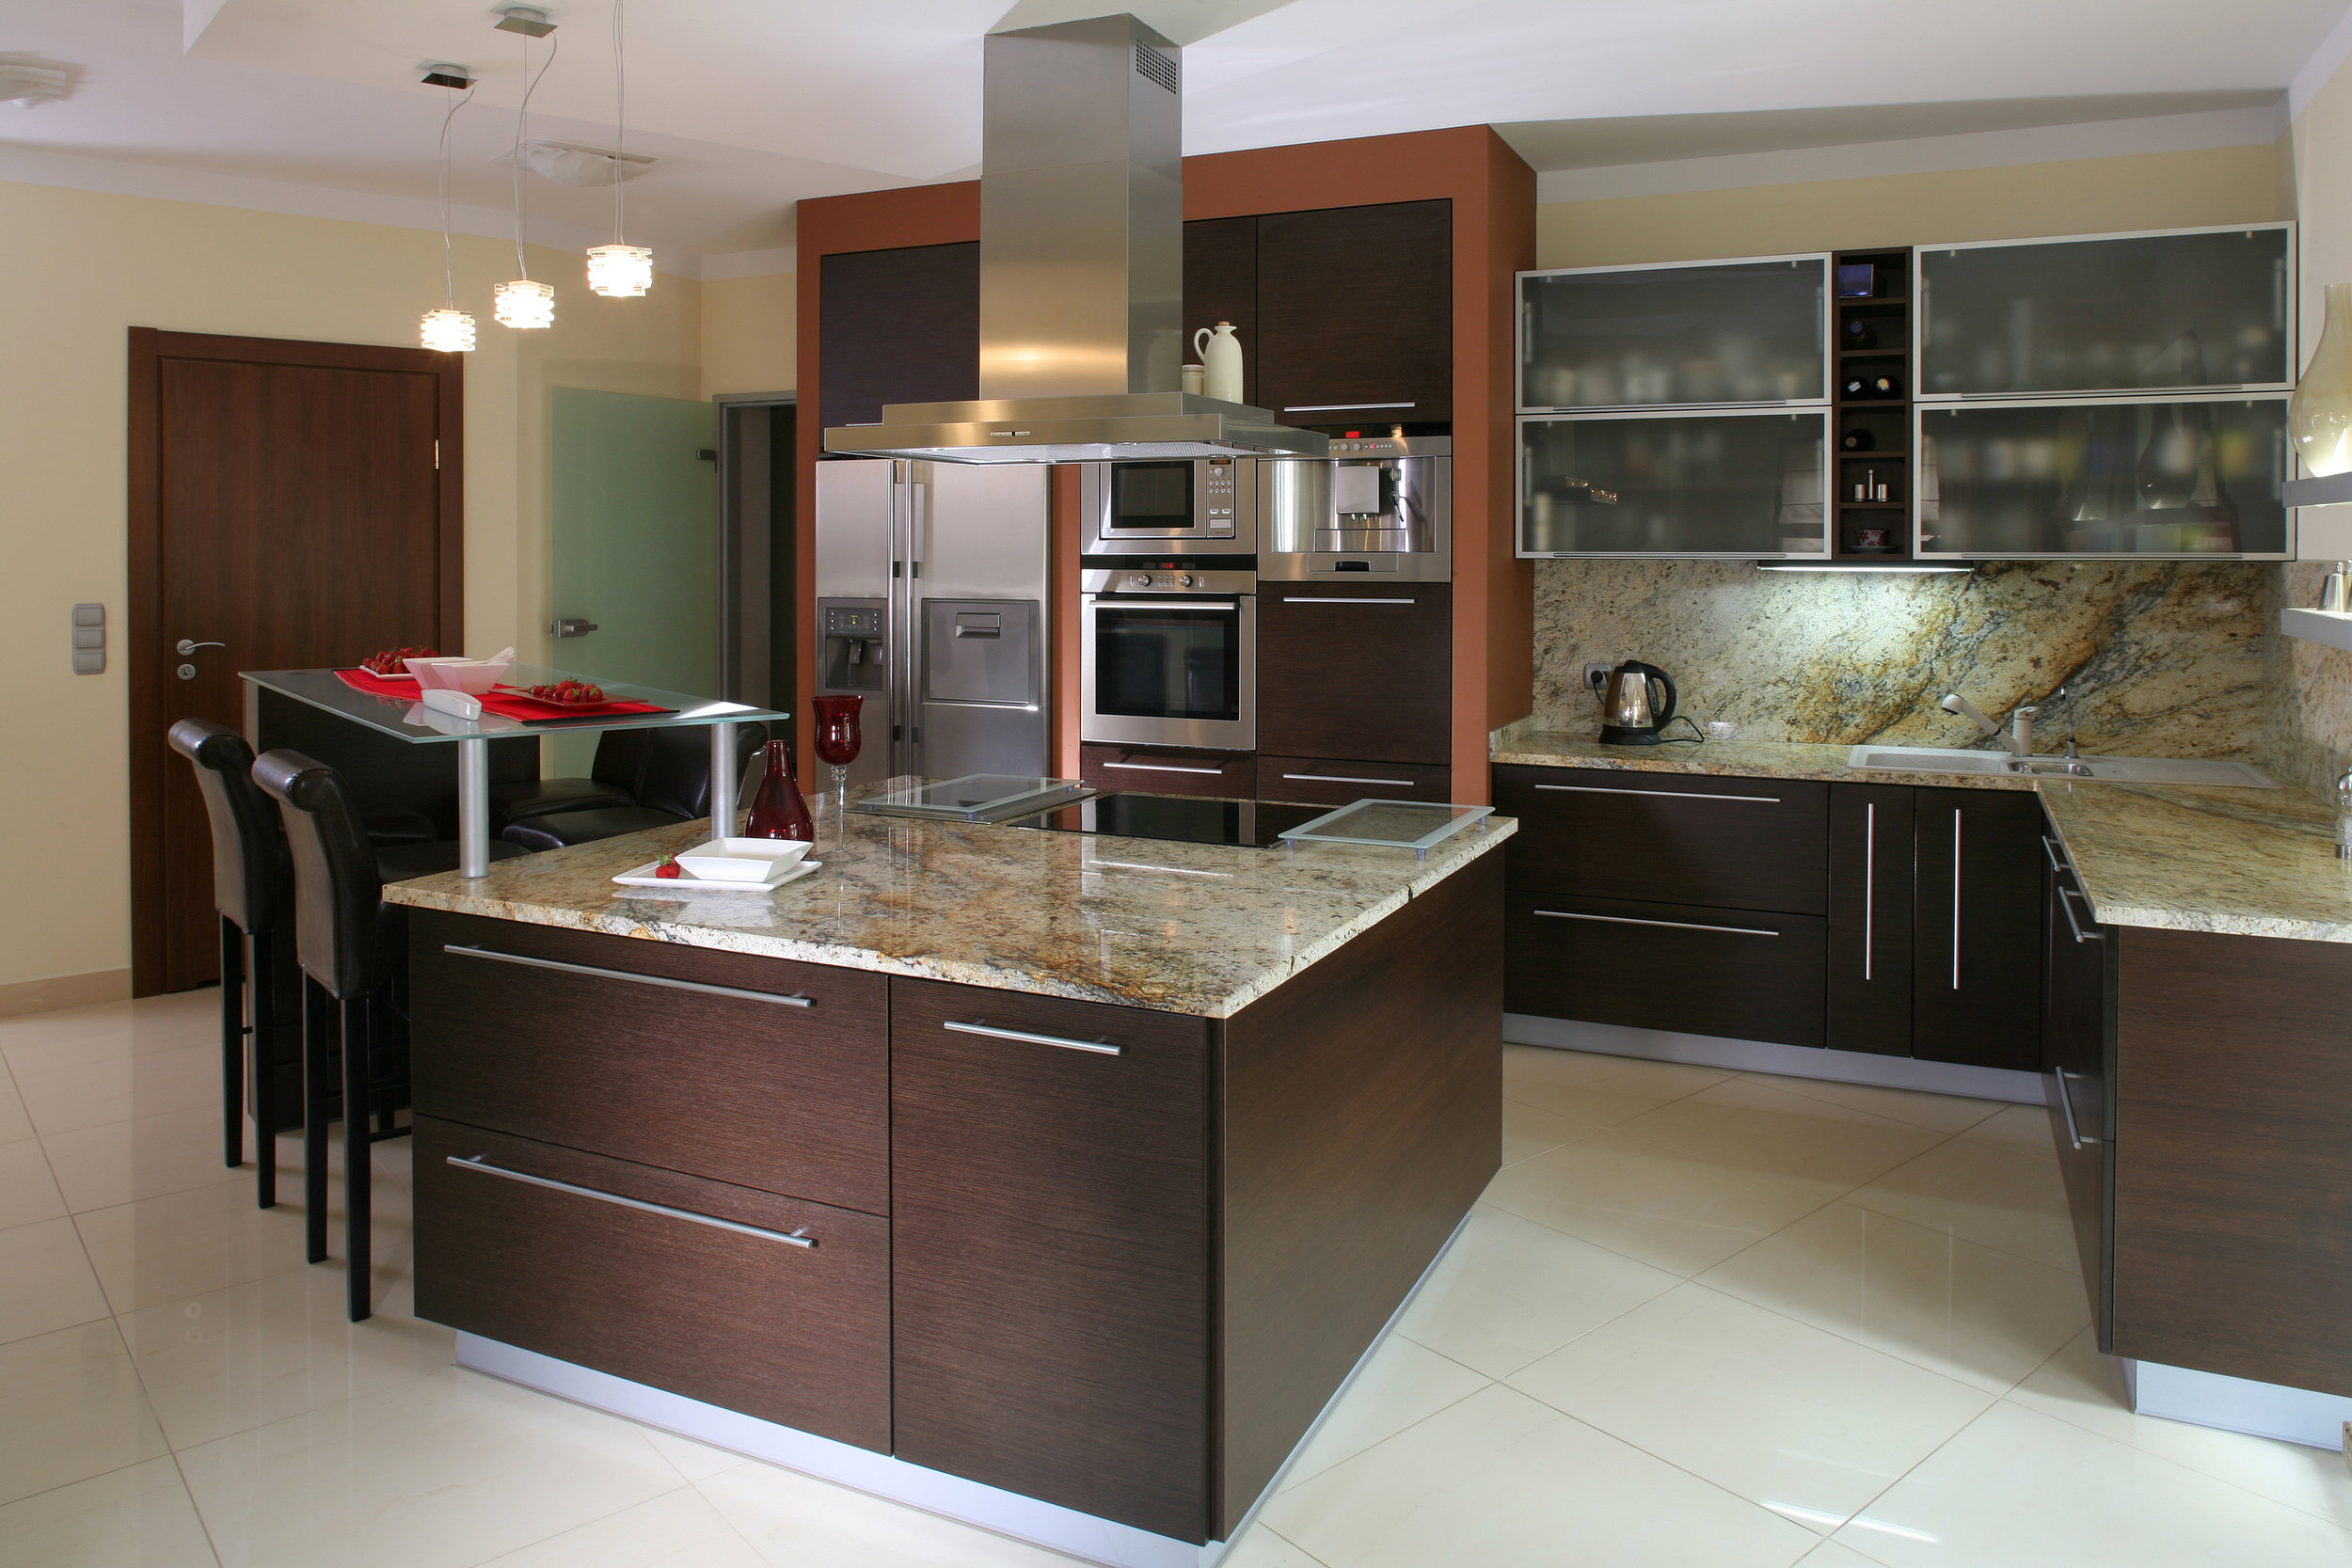 bigstock-View-of-a-modern-kitchen-19404182.jpg